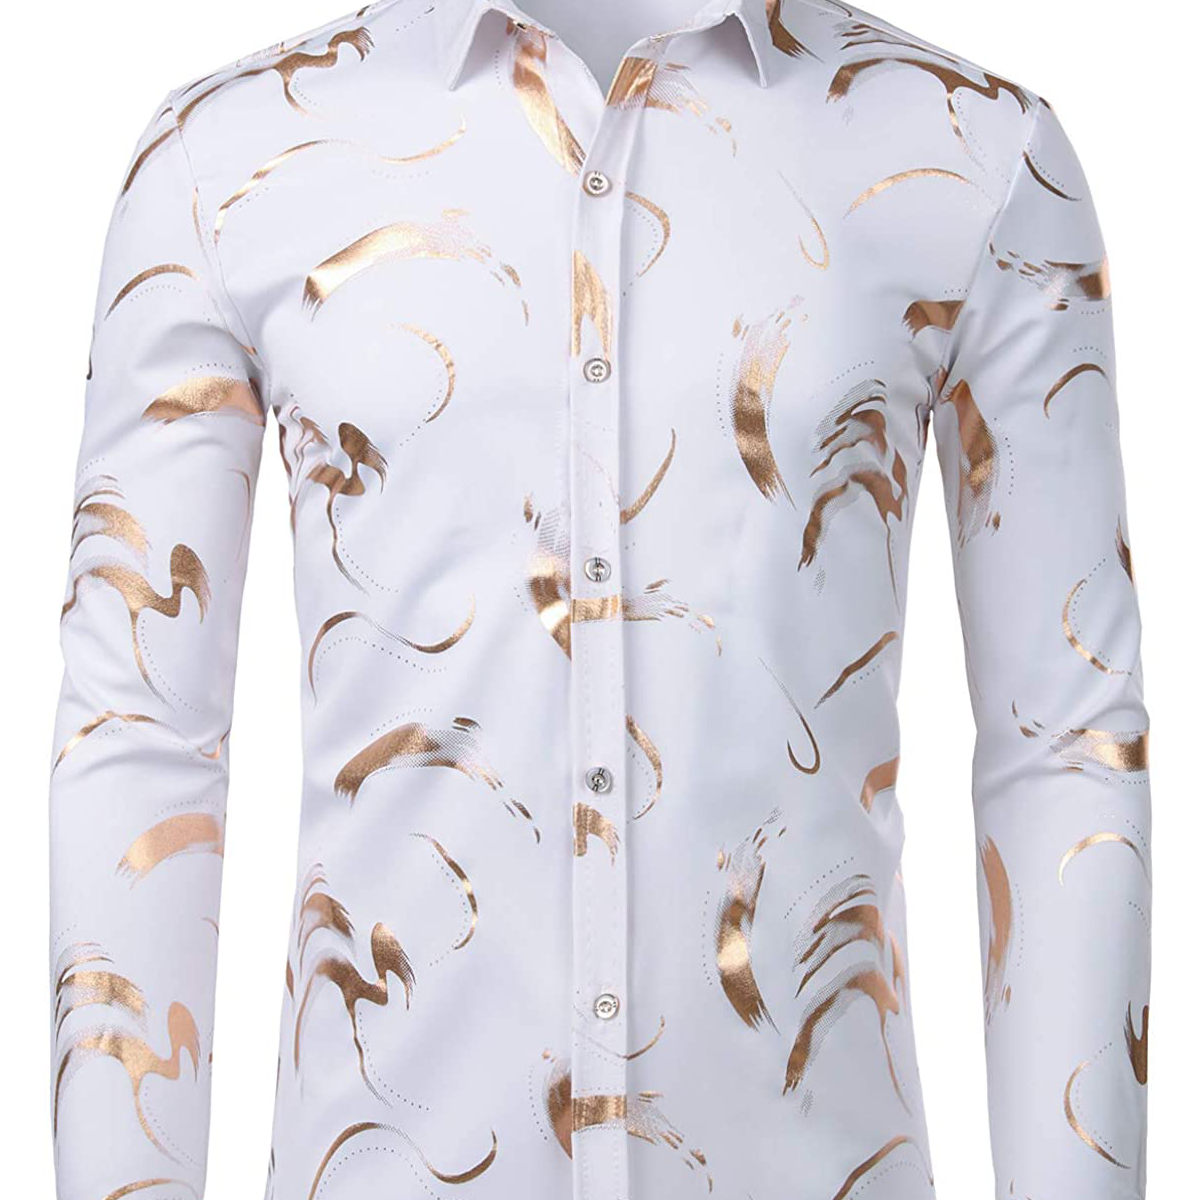 Men's Casual Print Long Sleeve Shirt